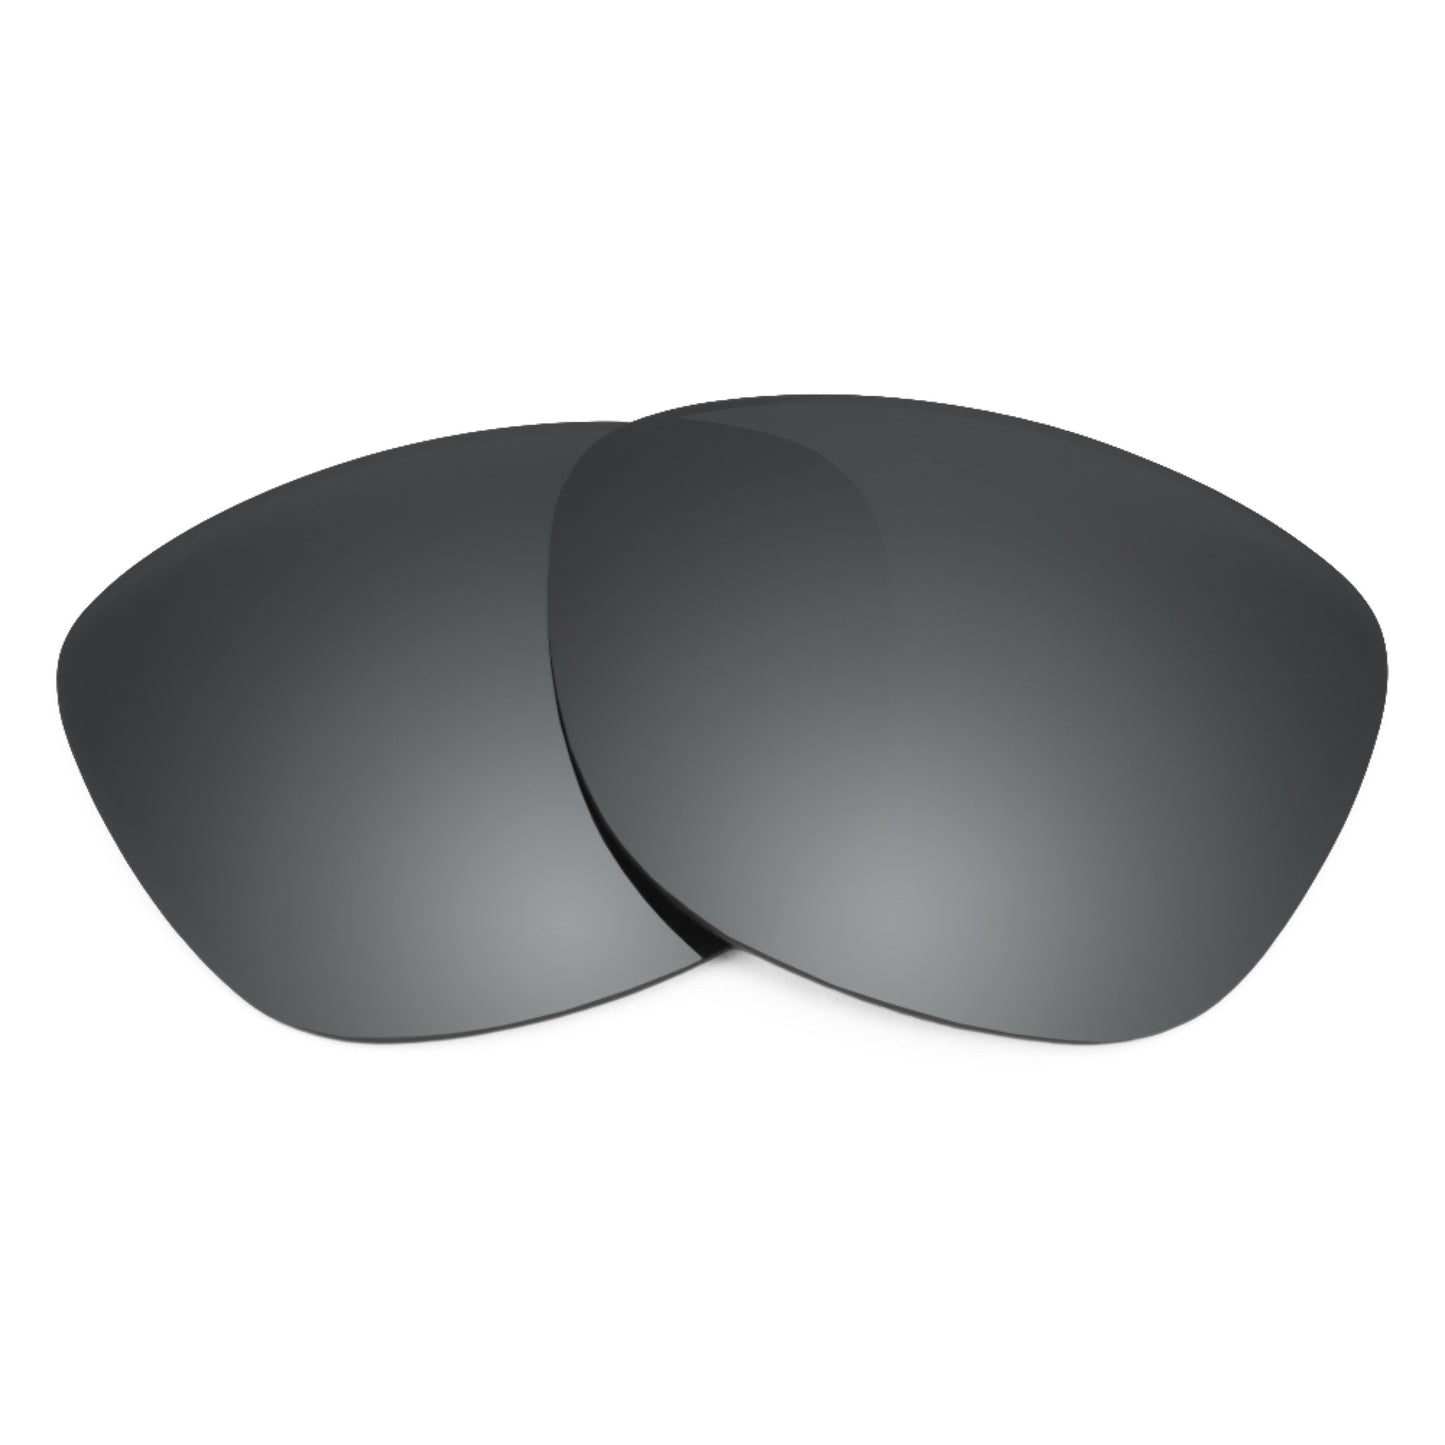 Revant replacement lenses for Ray-Ban Justin RB4165 51mm Elite Polarized Black Chrome